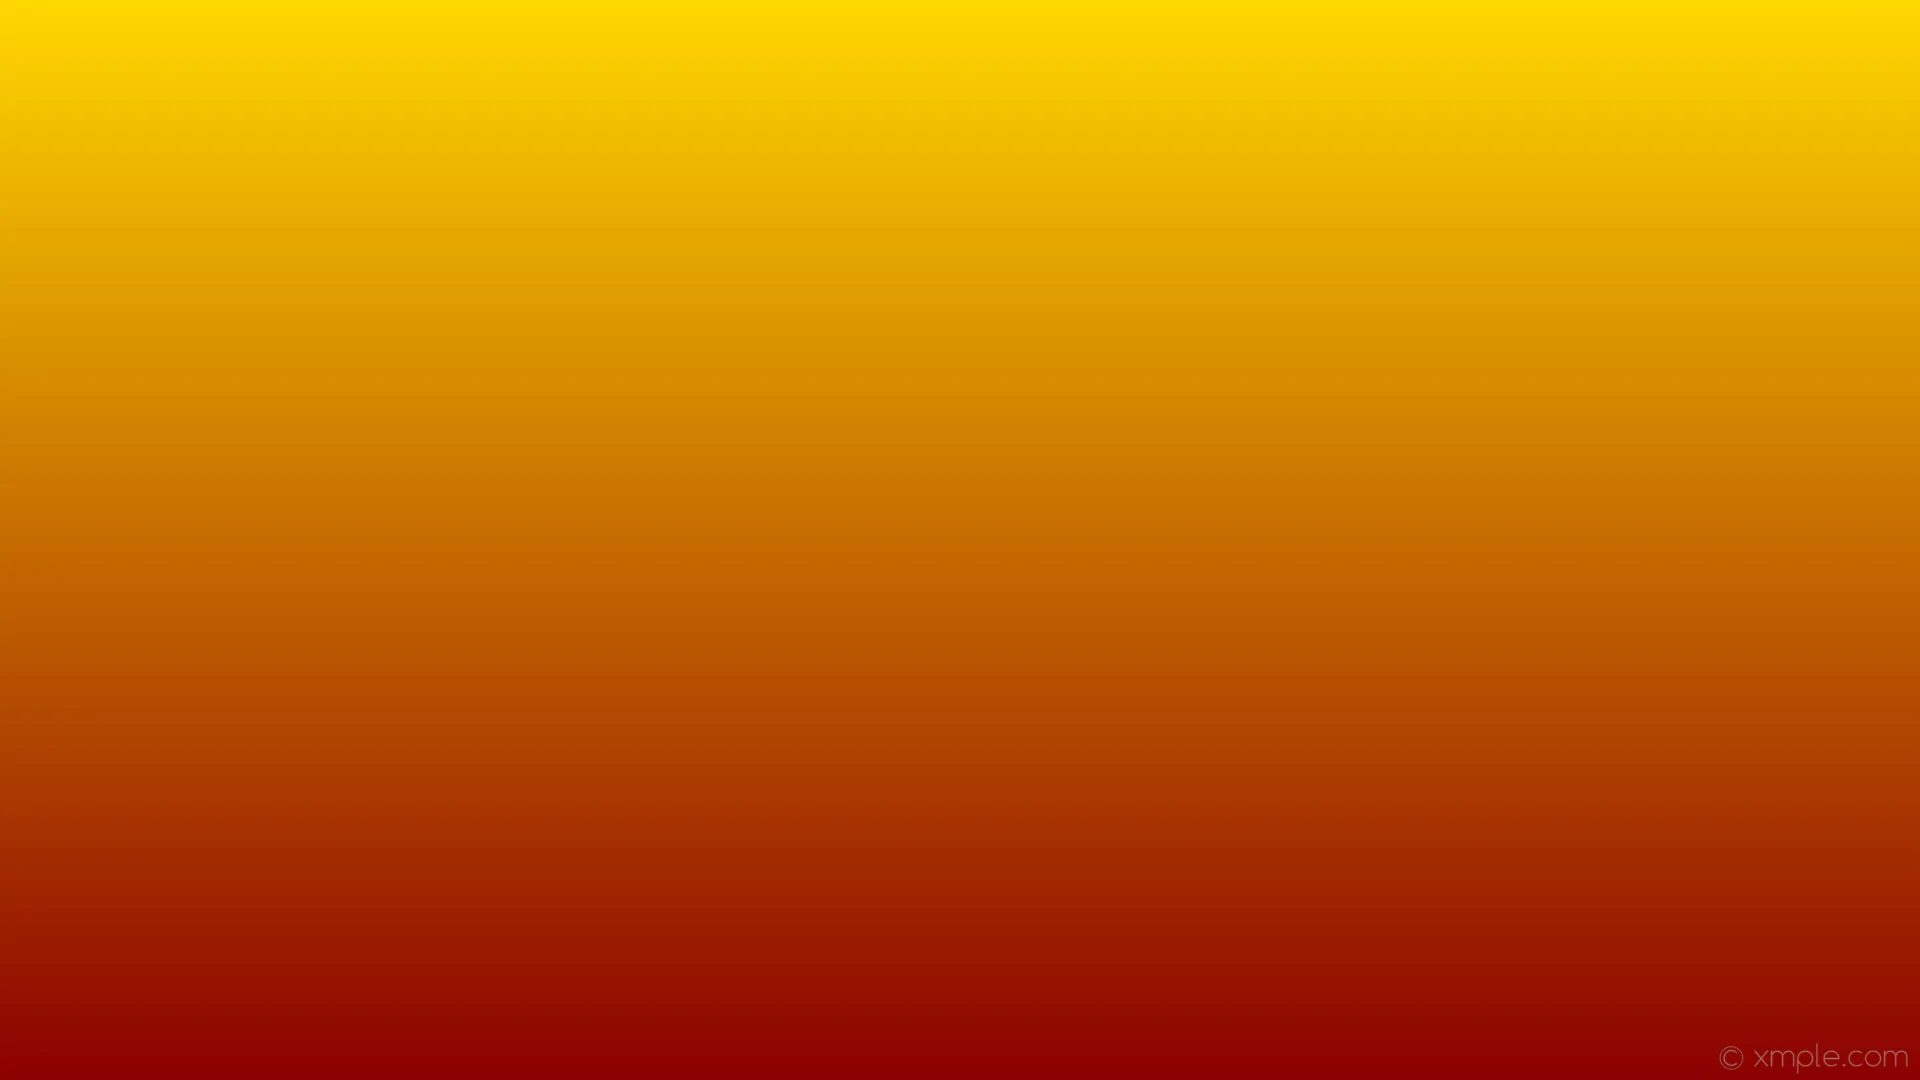 Wallpaper linear gradient yellow red gold dark red #ffd700 b0000 90